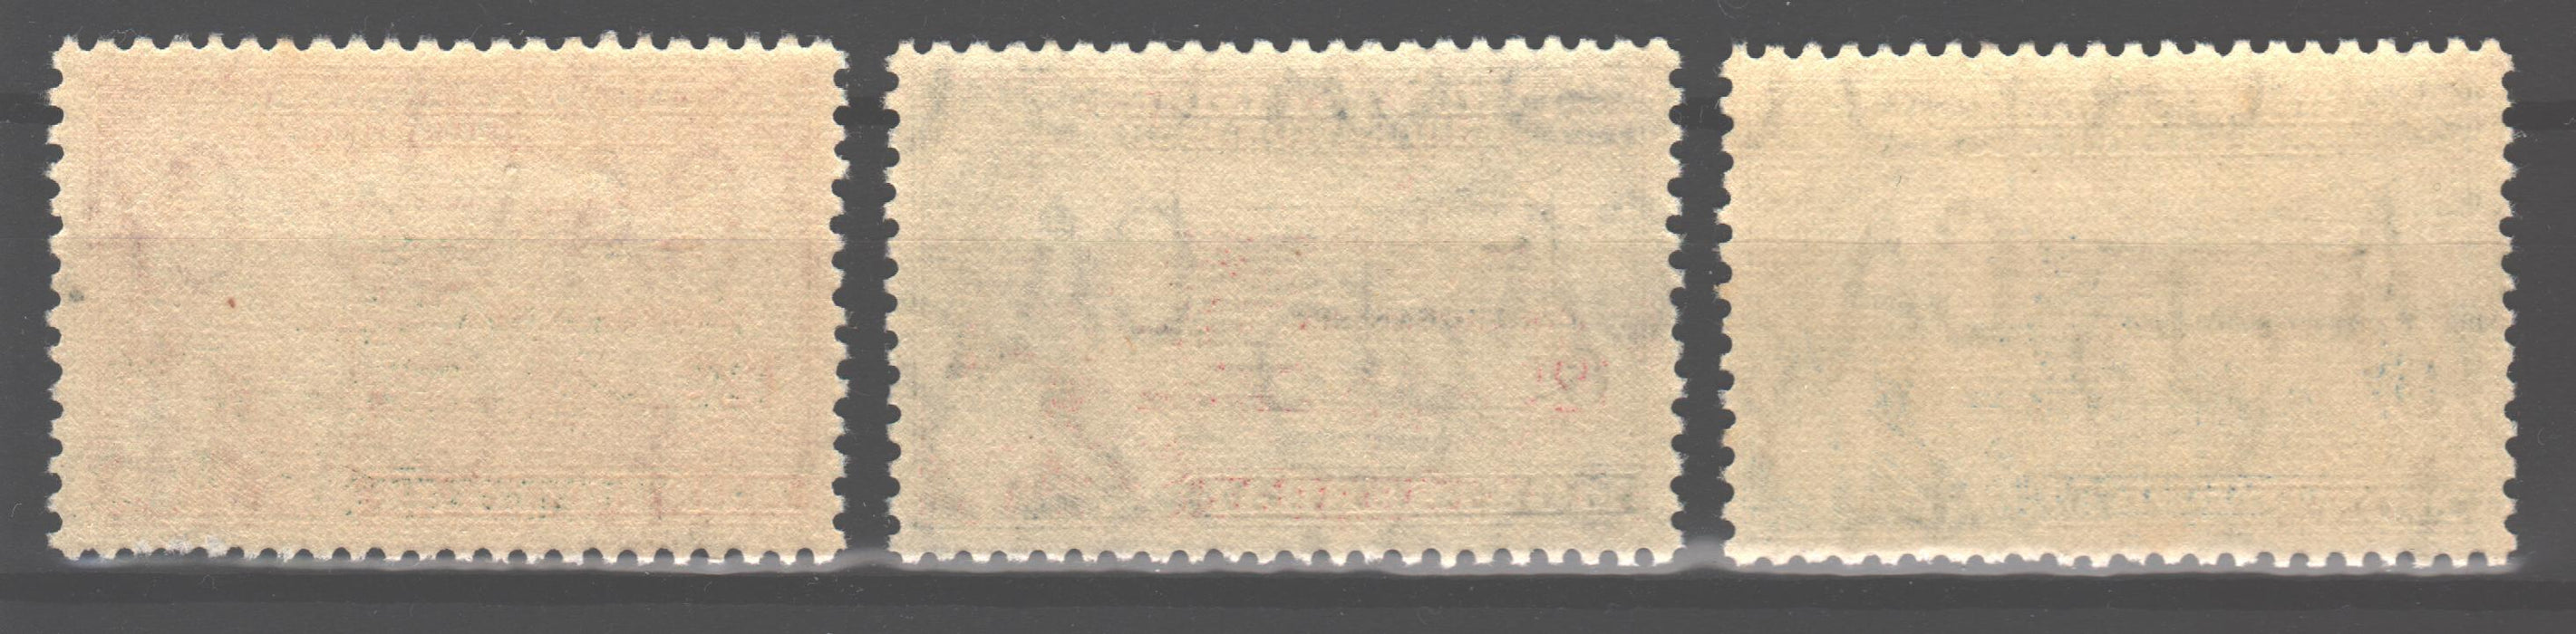 Montserrat 1958 West Indies Issue Scott #143-145 c.v. 2.35$ - (TIP A) in Stamps Mall